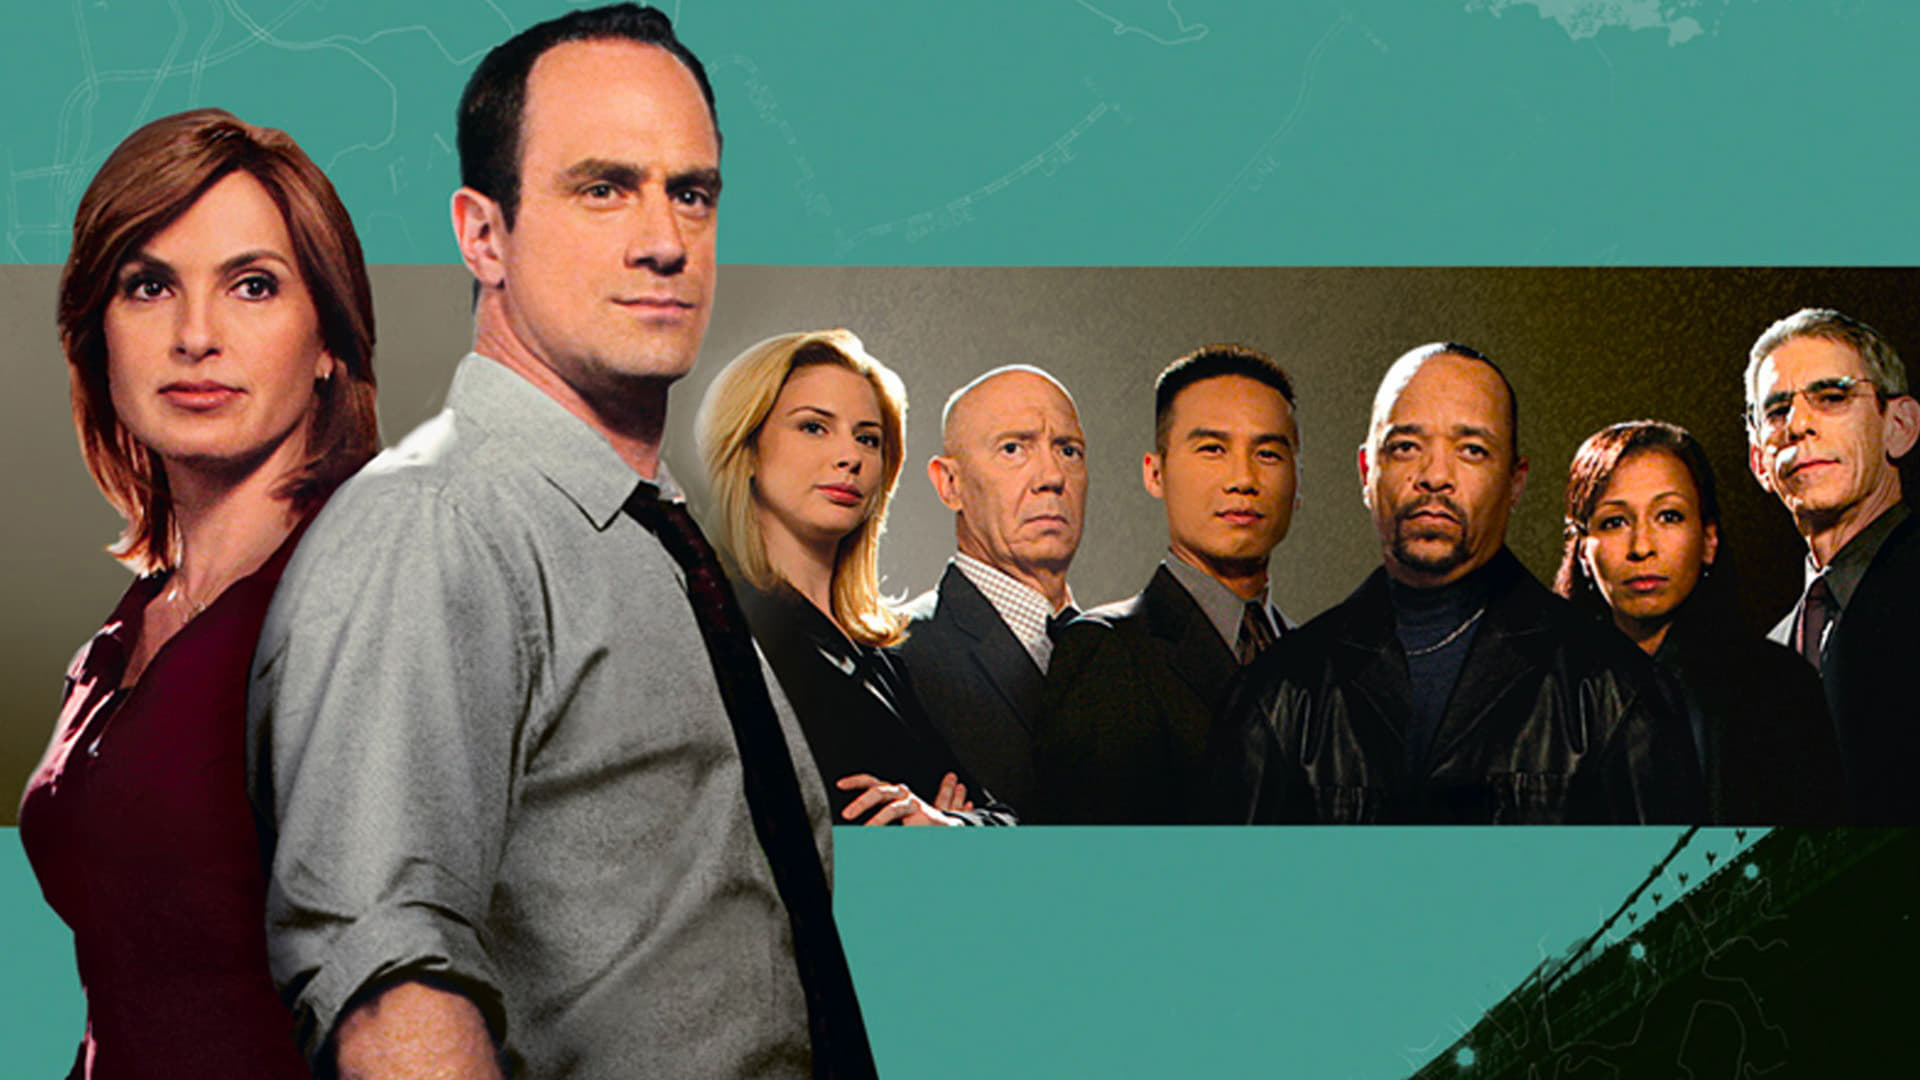 Law & Order: Special Victims Unit - Season 23 Episode 15